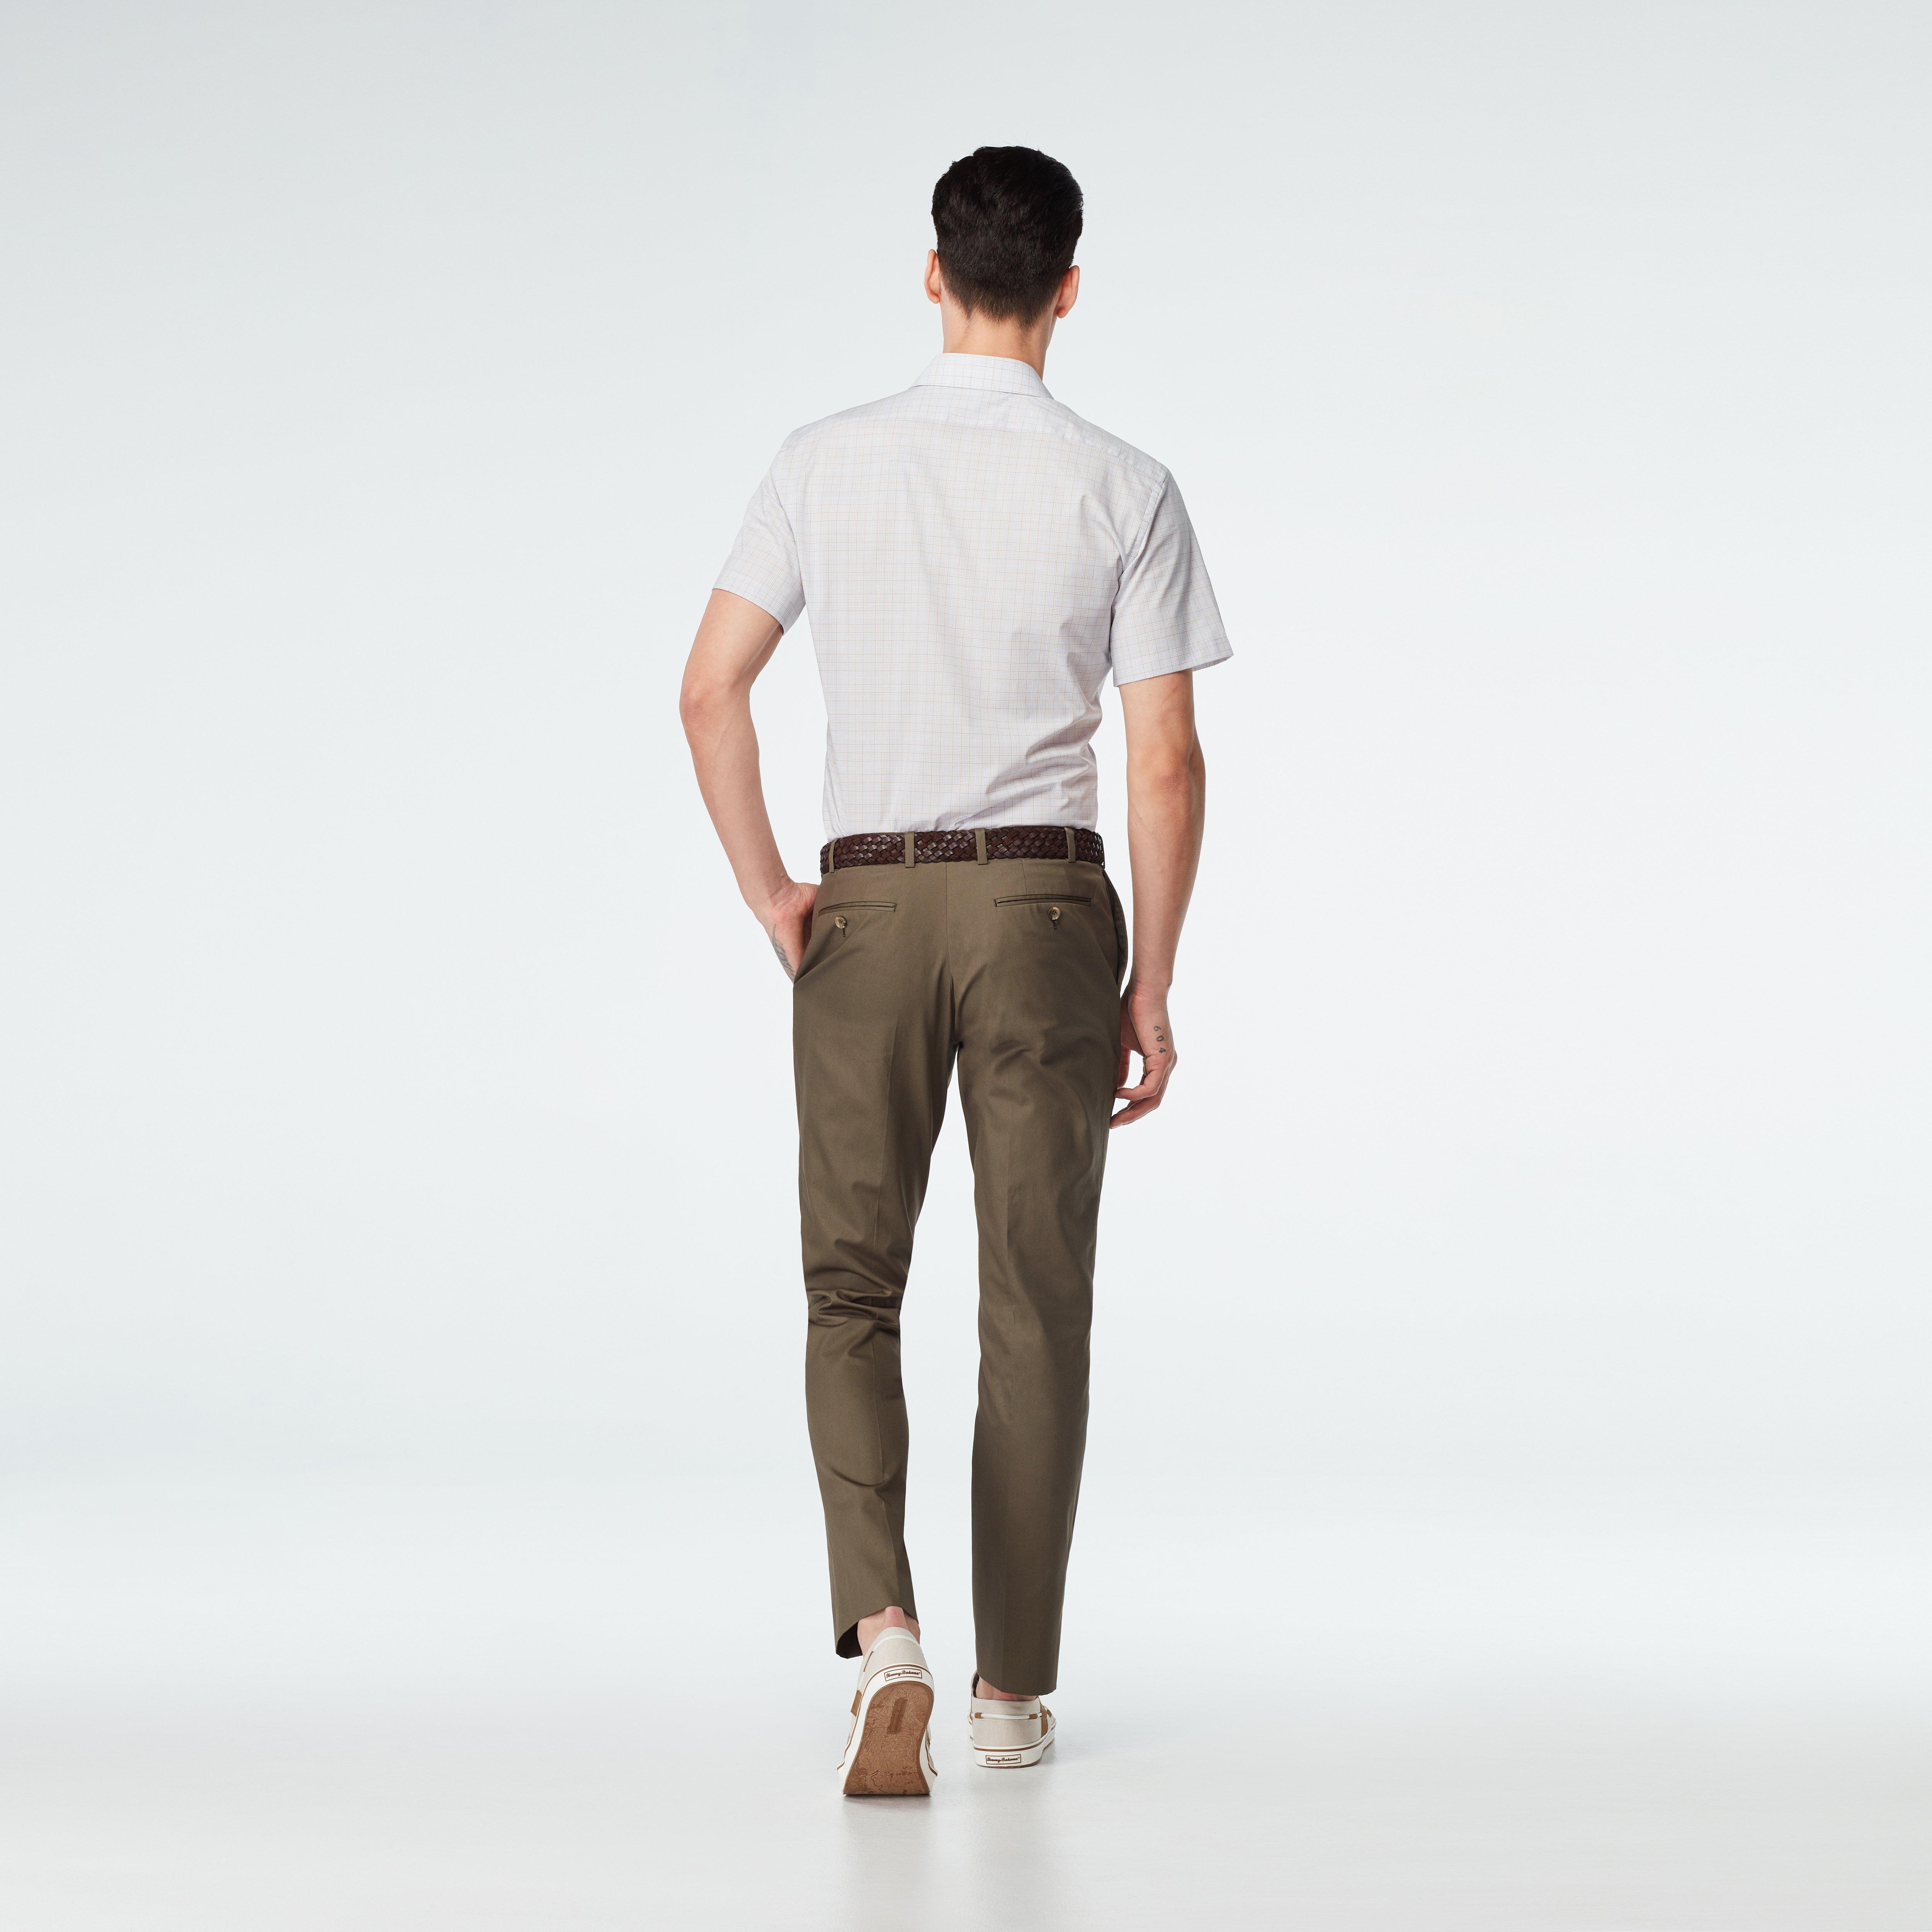 Custom Pants Made For You - Halton Sage Chino | INDOCHINO